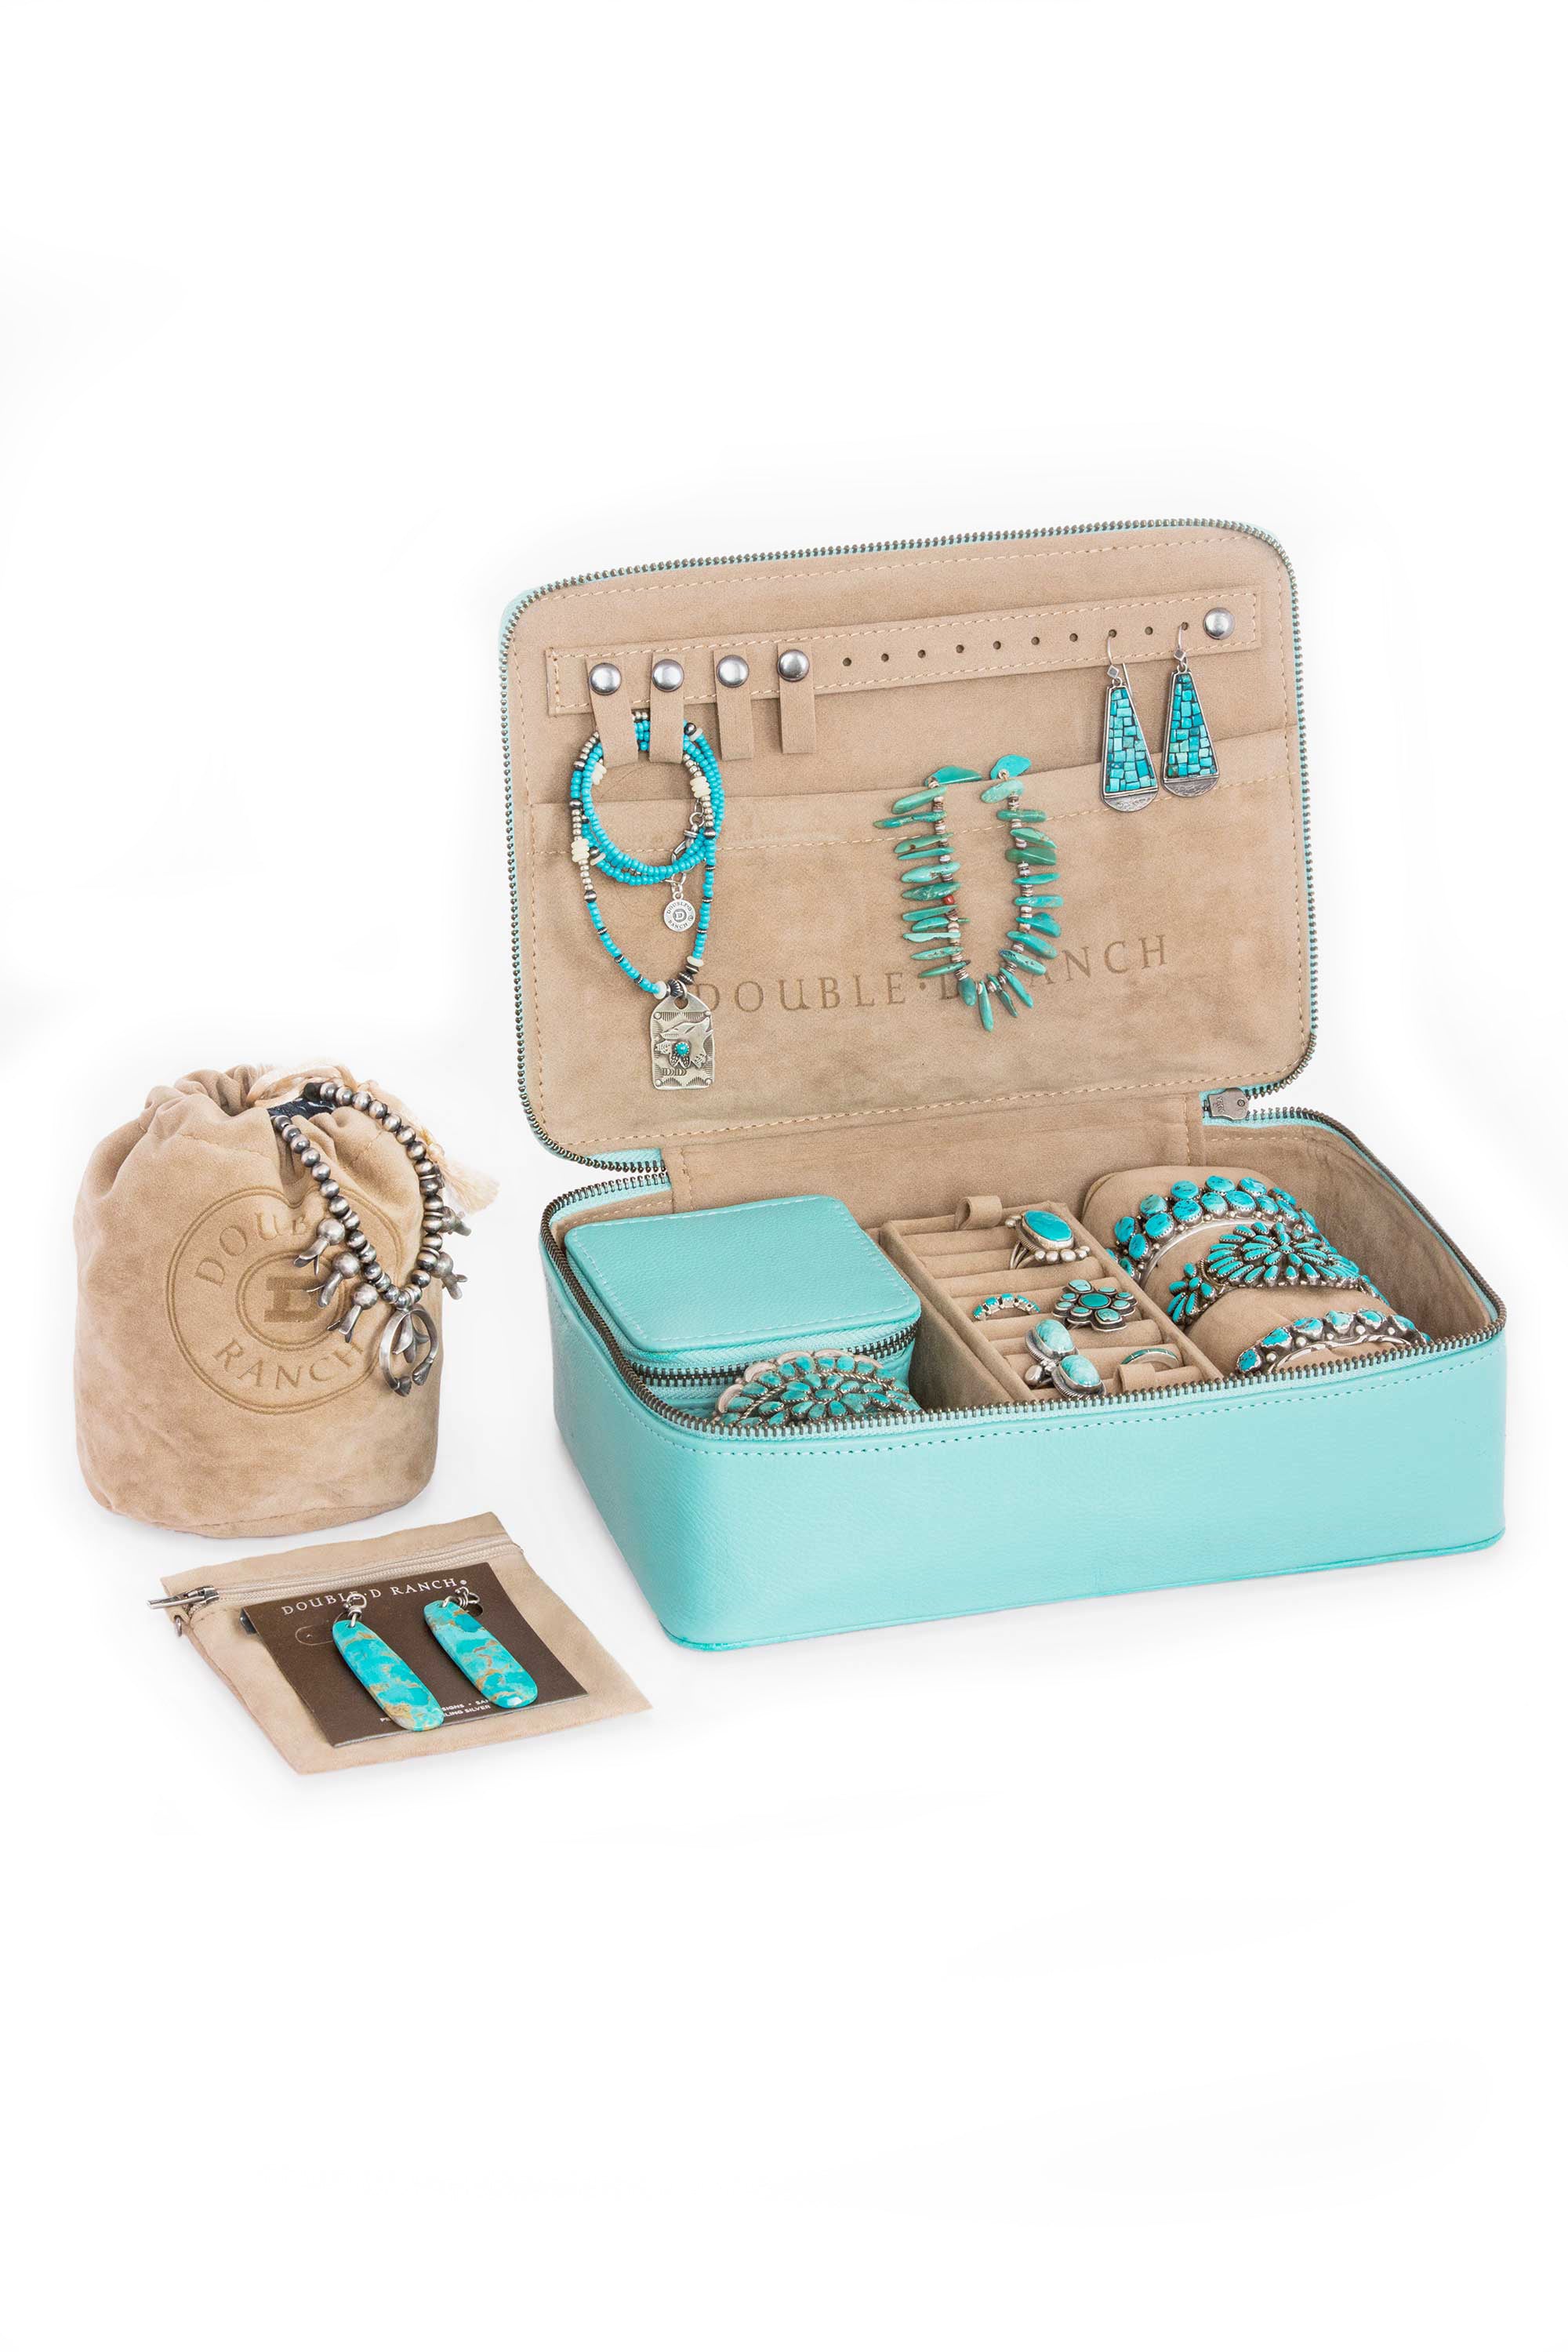 jewelry trunk box